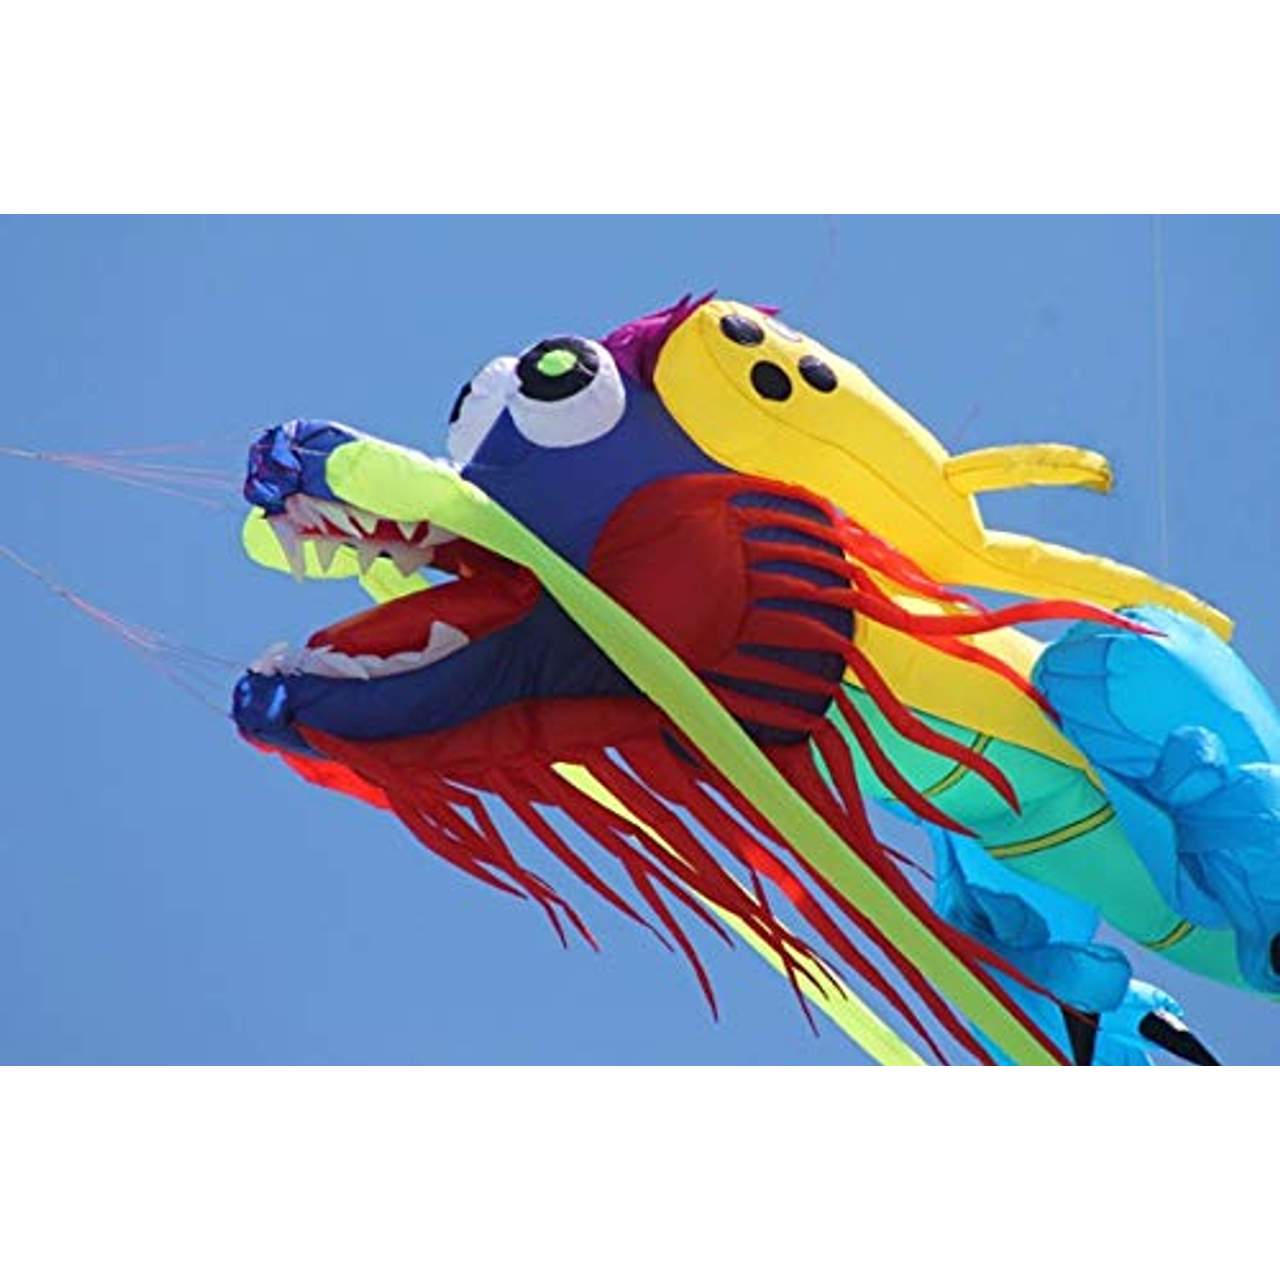 FEN Großer Nylon 3D Drachen Chinese Dragon Software Show Kite